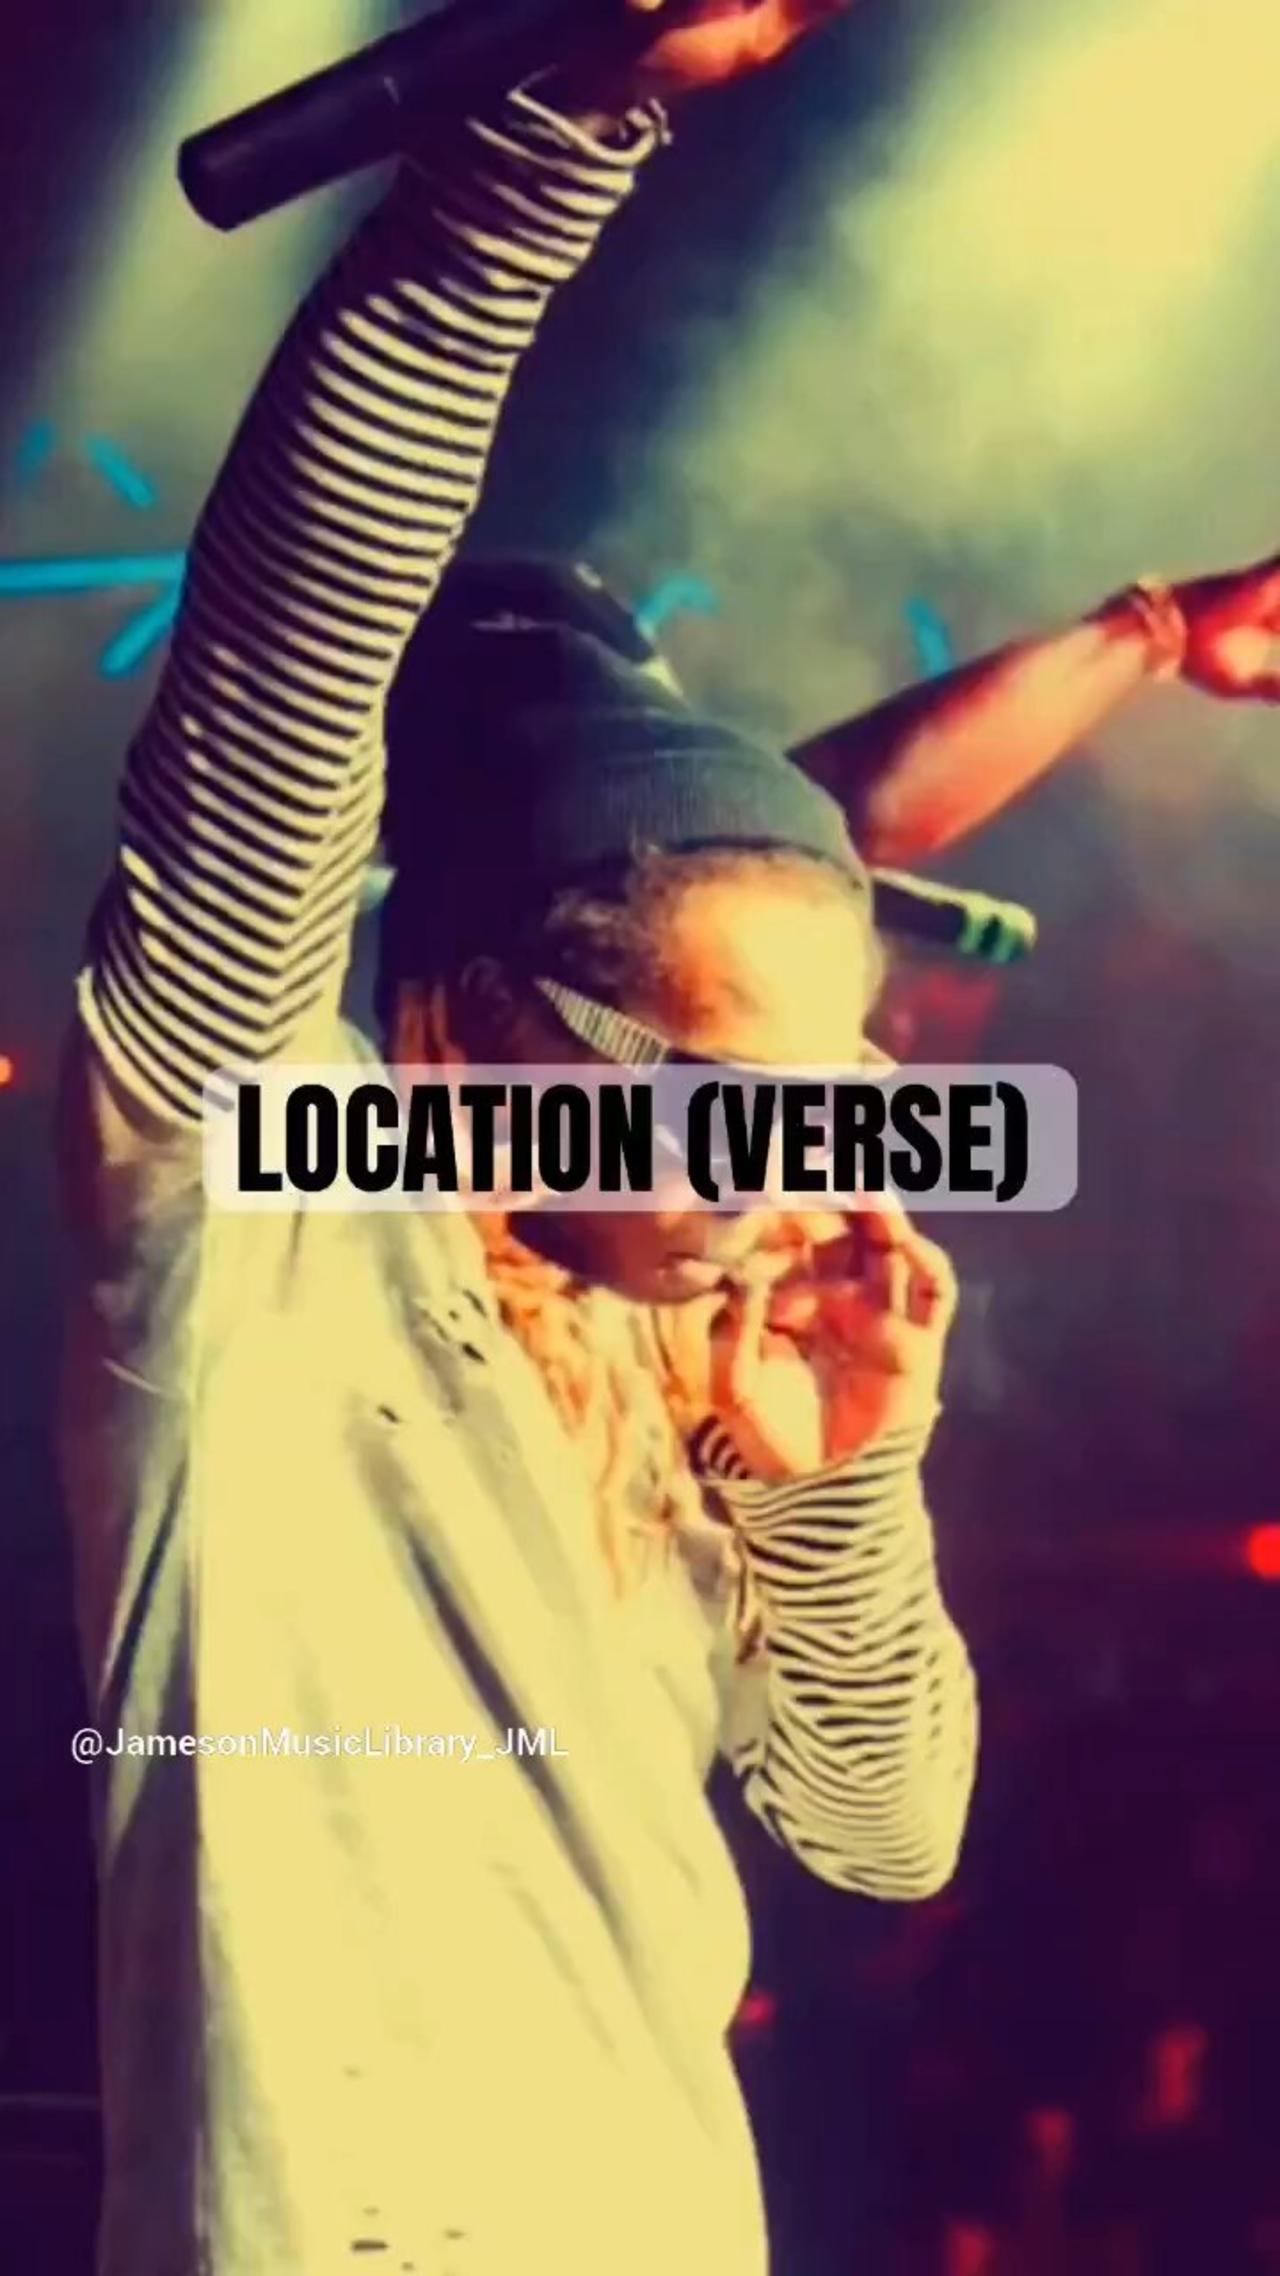 Lil Wayne VERSE - Location (2017) (432hz)